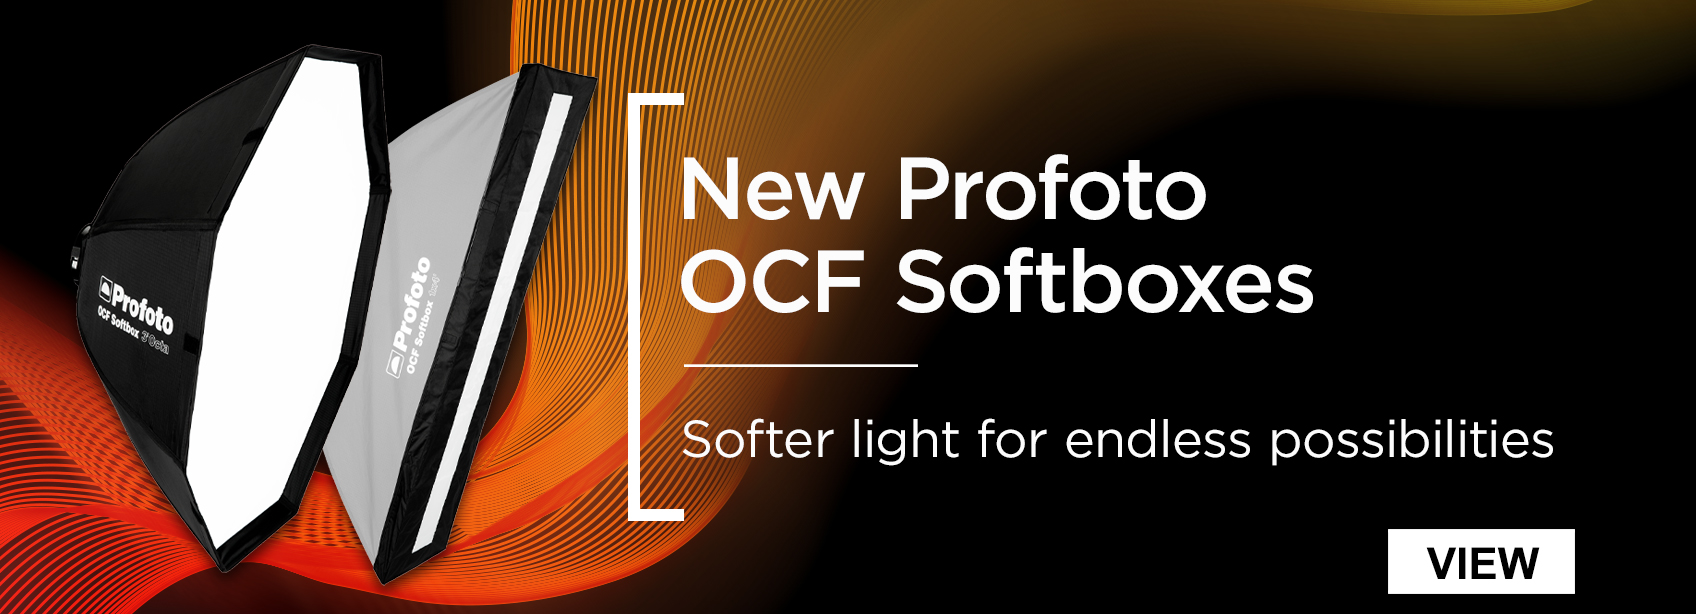 Profoto OCF Softboxes | Endless Opportunities